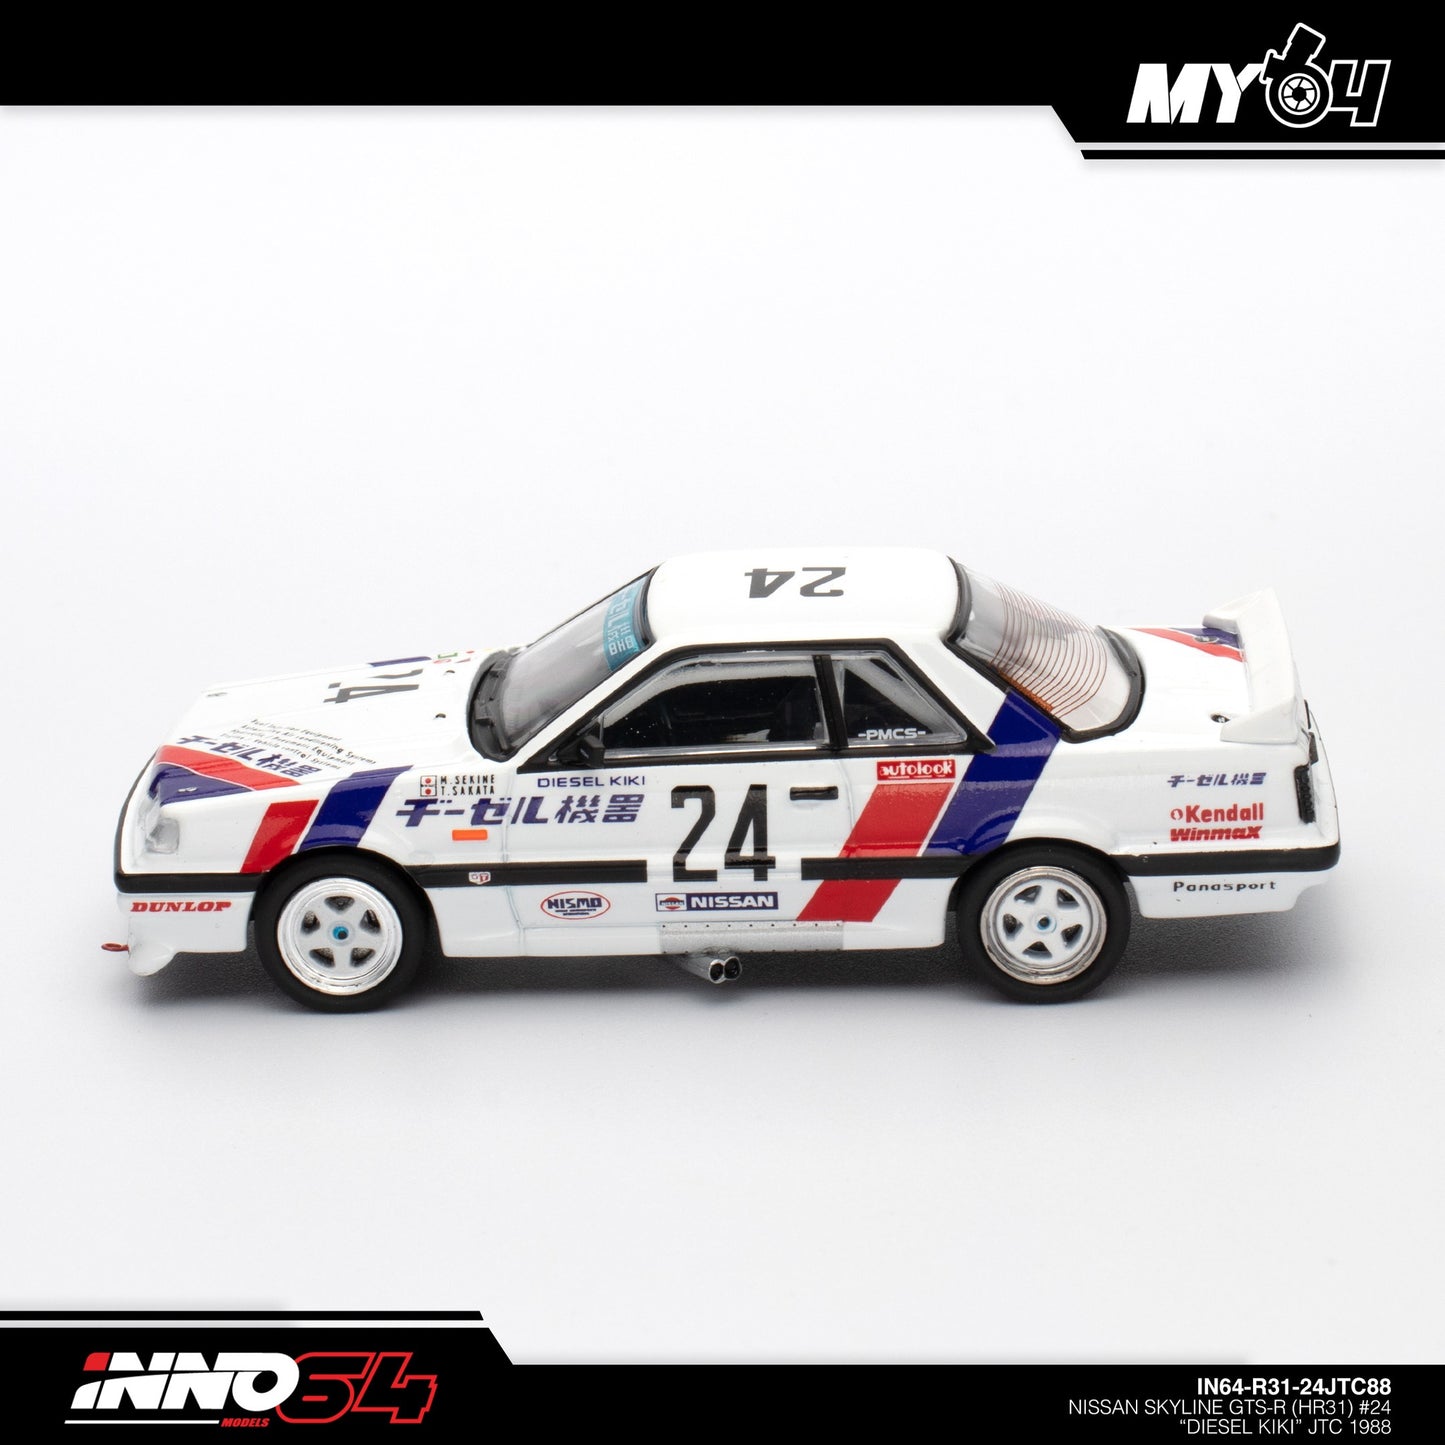 [INNO64] Nissan Skyline GTS-R (HR31) #24 "DIESEL KIKI" JTC 1988